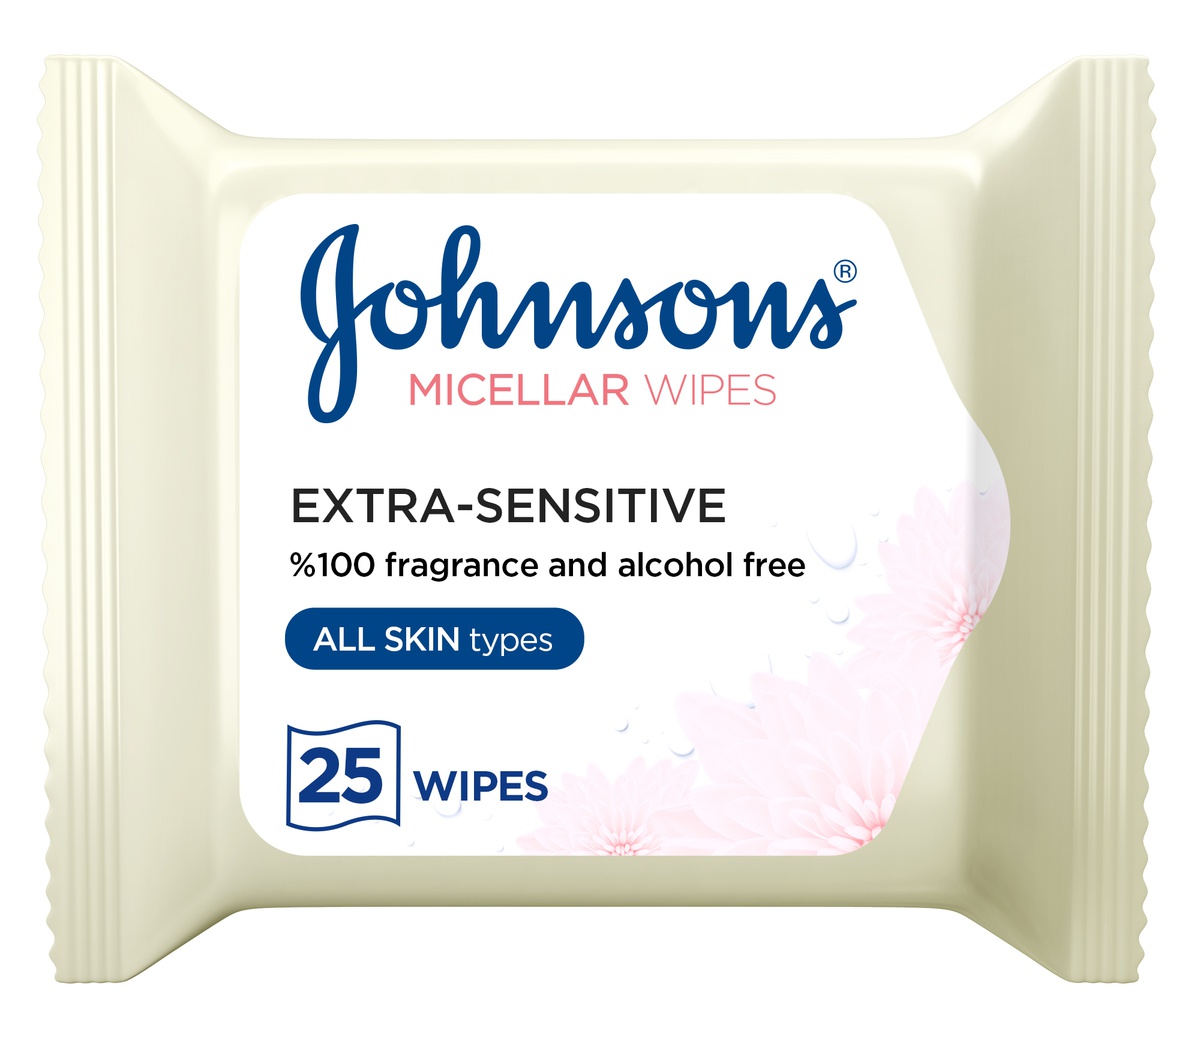 Johnson's Micellar Wipes Extra-sensitive